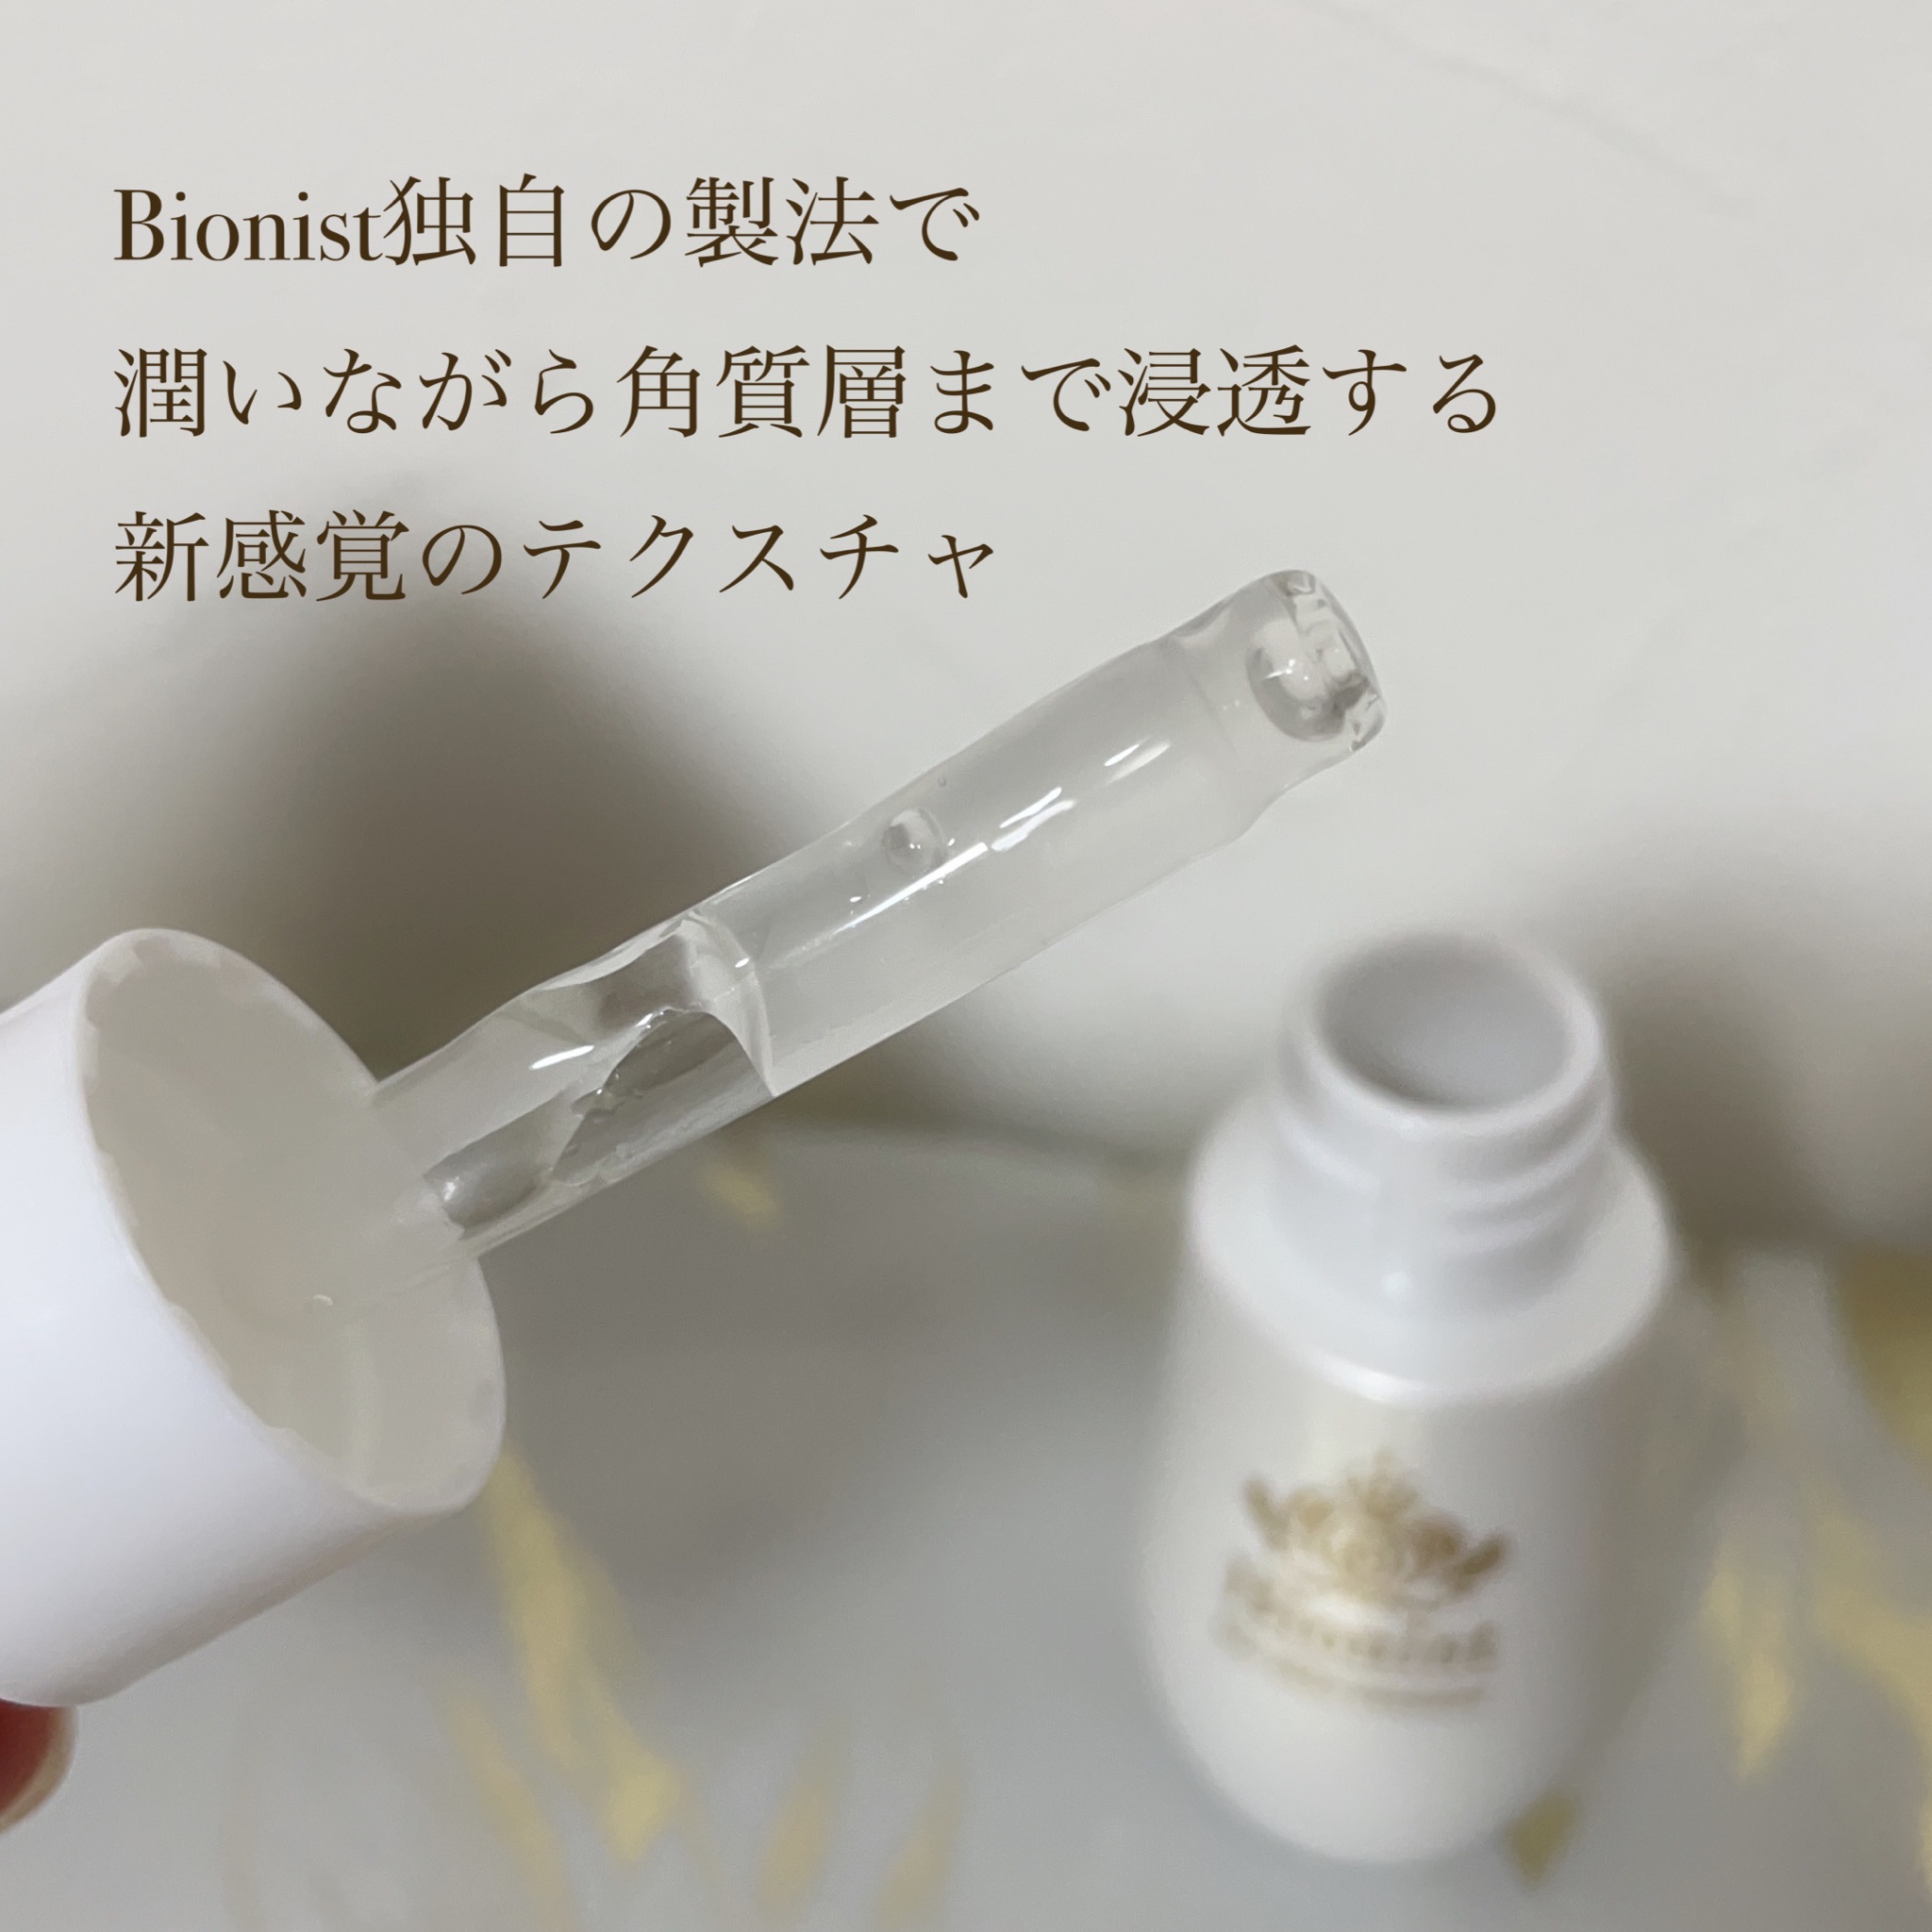 Bionist (ビオニスト) / Bionist bio skin essenceの公式商品情報 